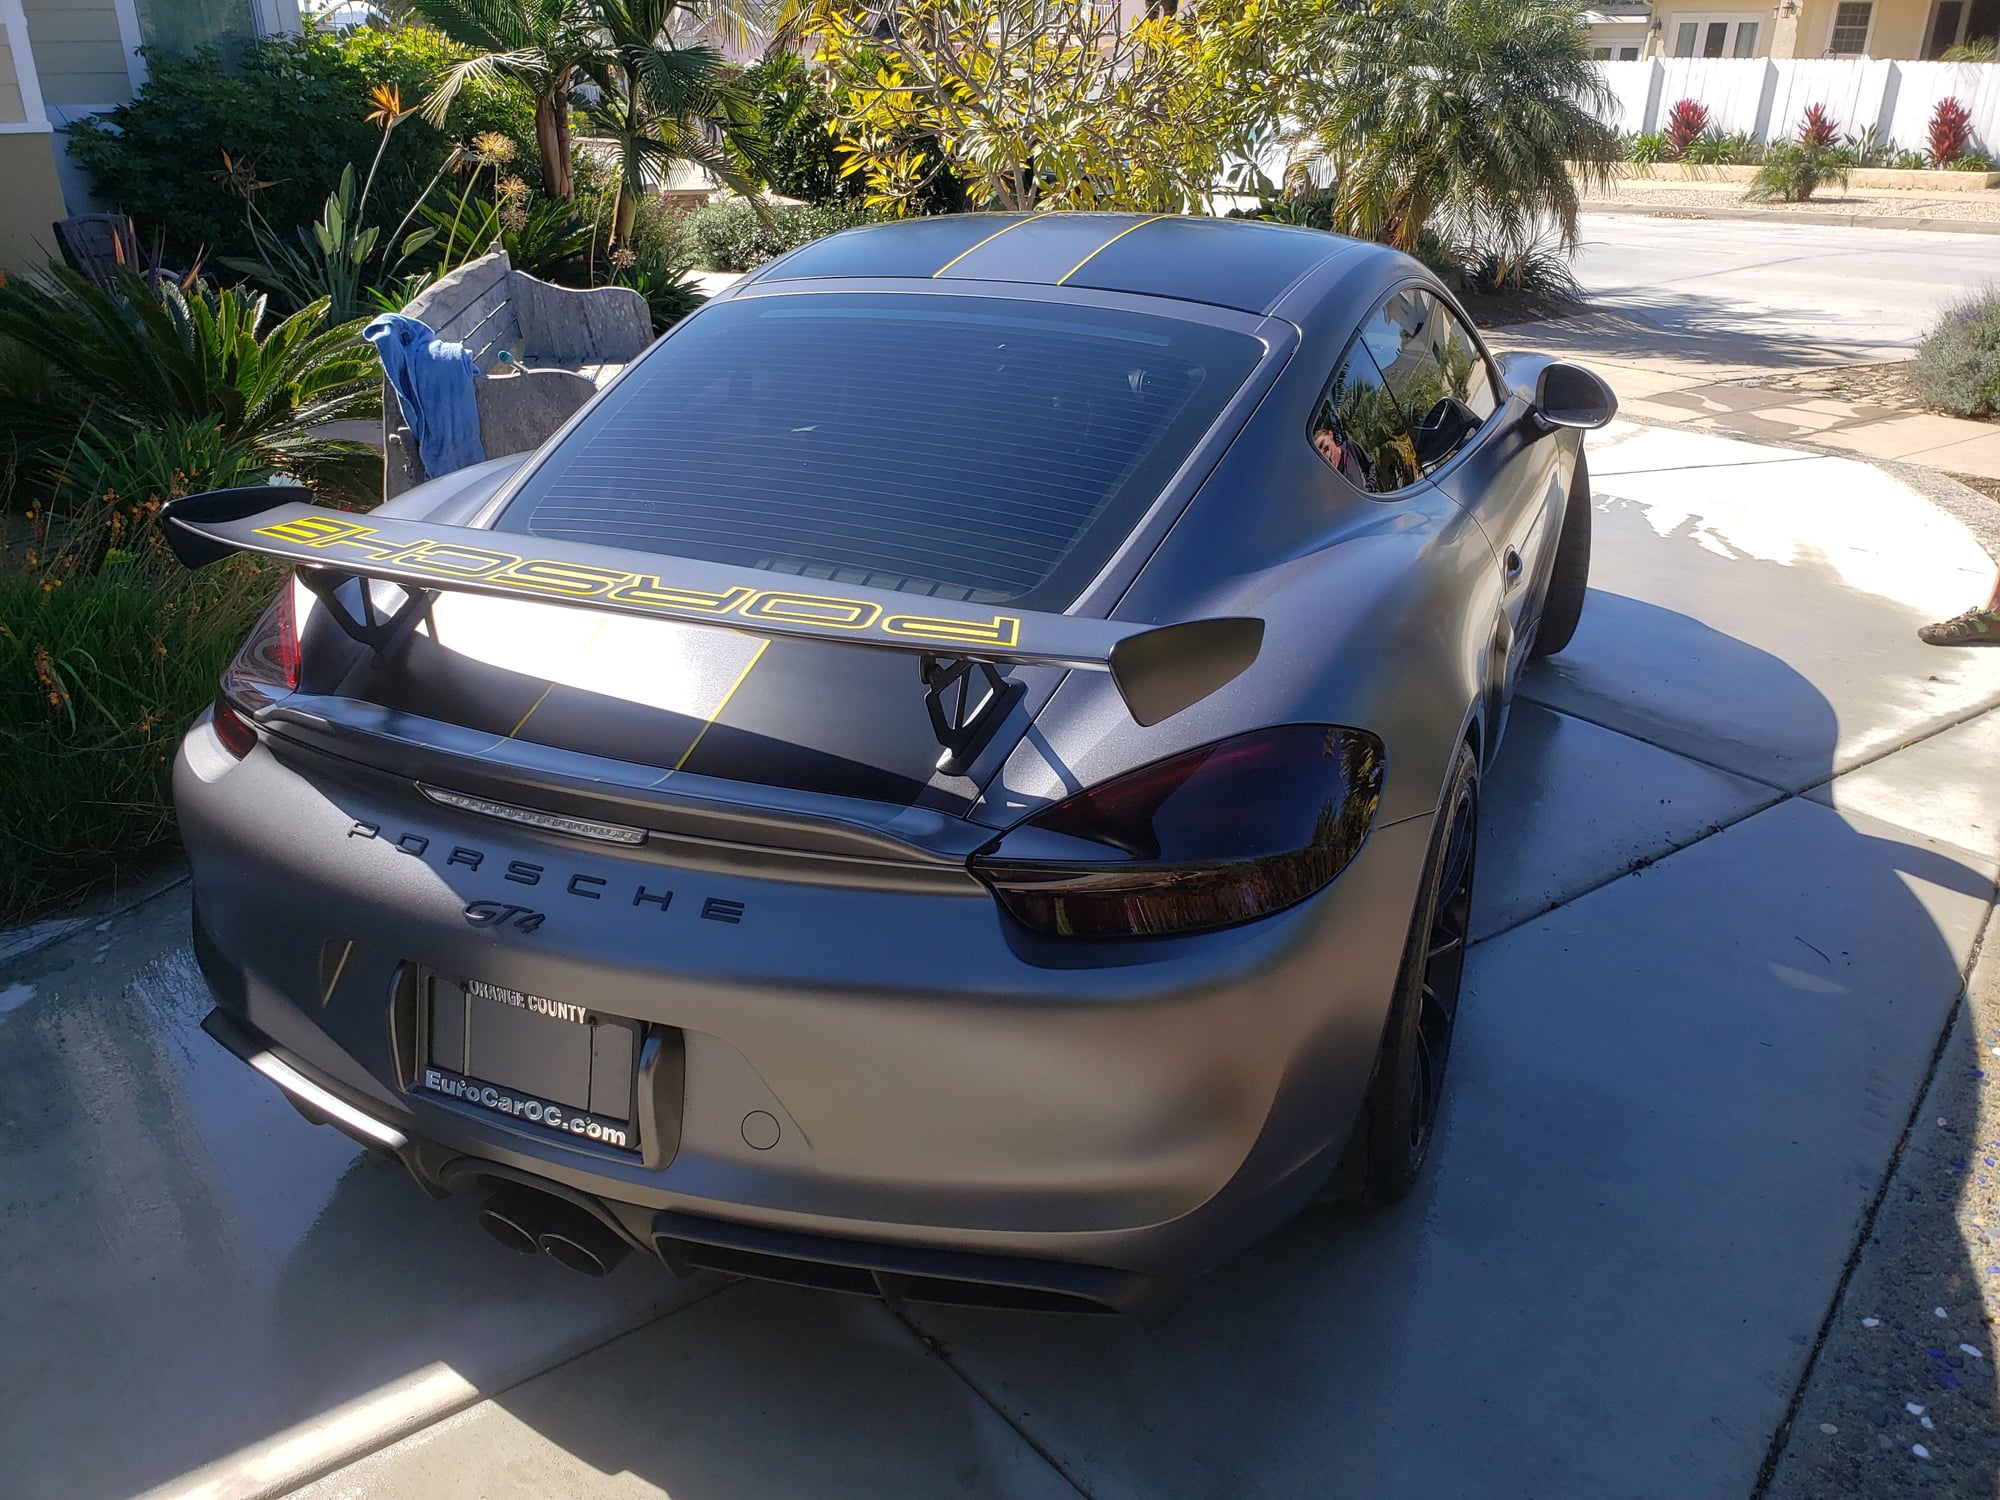 2016 Porsche Cayman GT4 -  - Used - VIN WP0AC2A8XGK192666 - 26,514 Miles - 6 cyl - 2WD - Manual - San Diego, CA 92109, United States